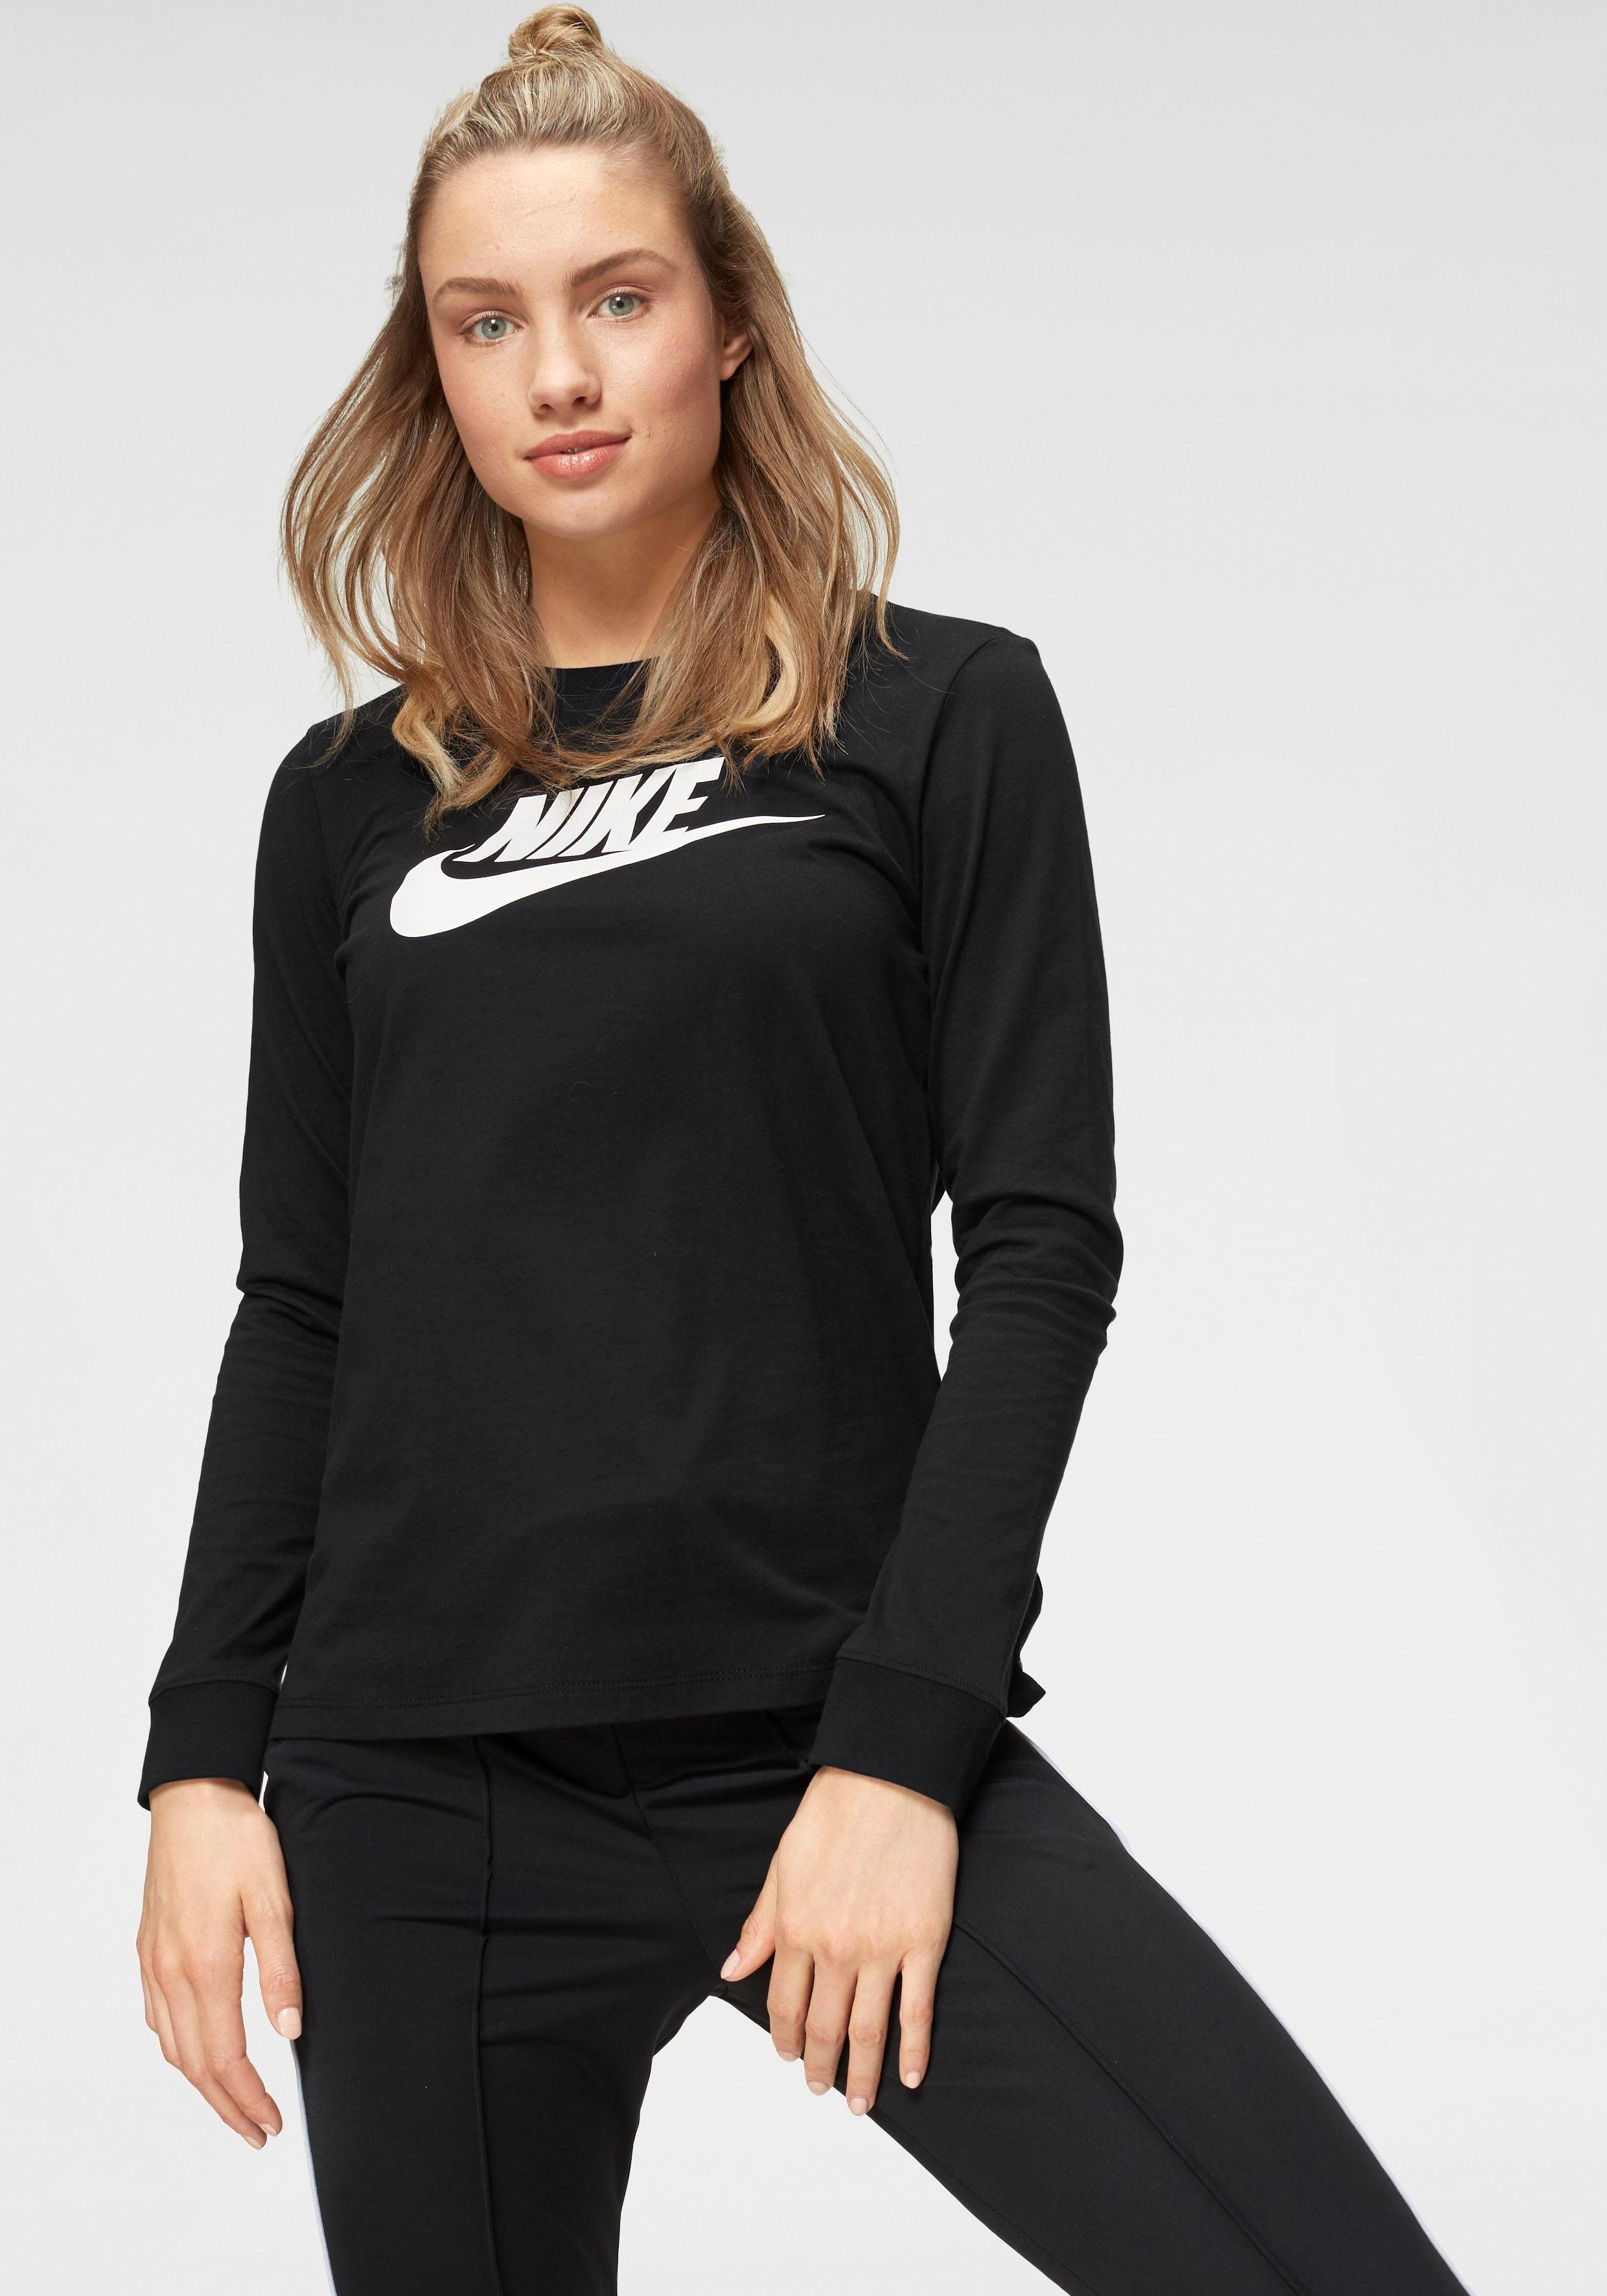 Nike Shirts online kaufen | OTTO